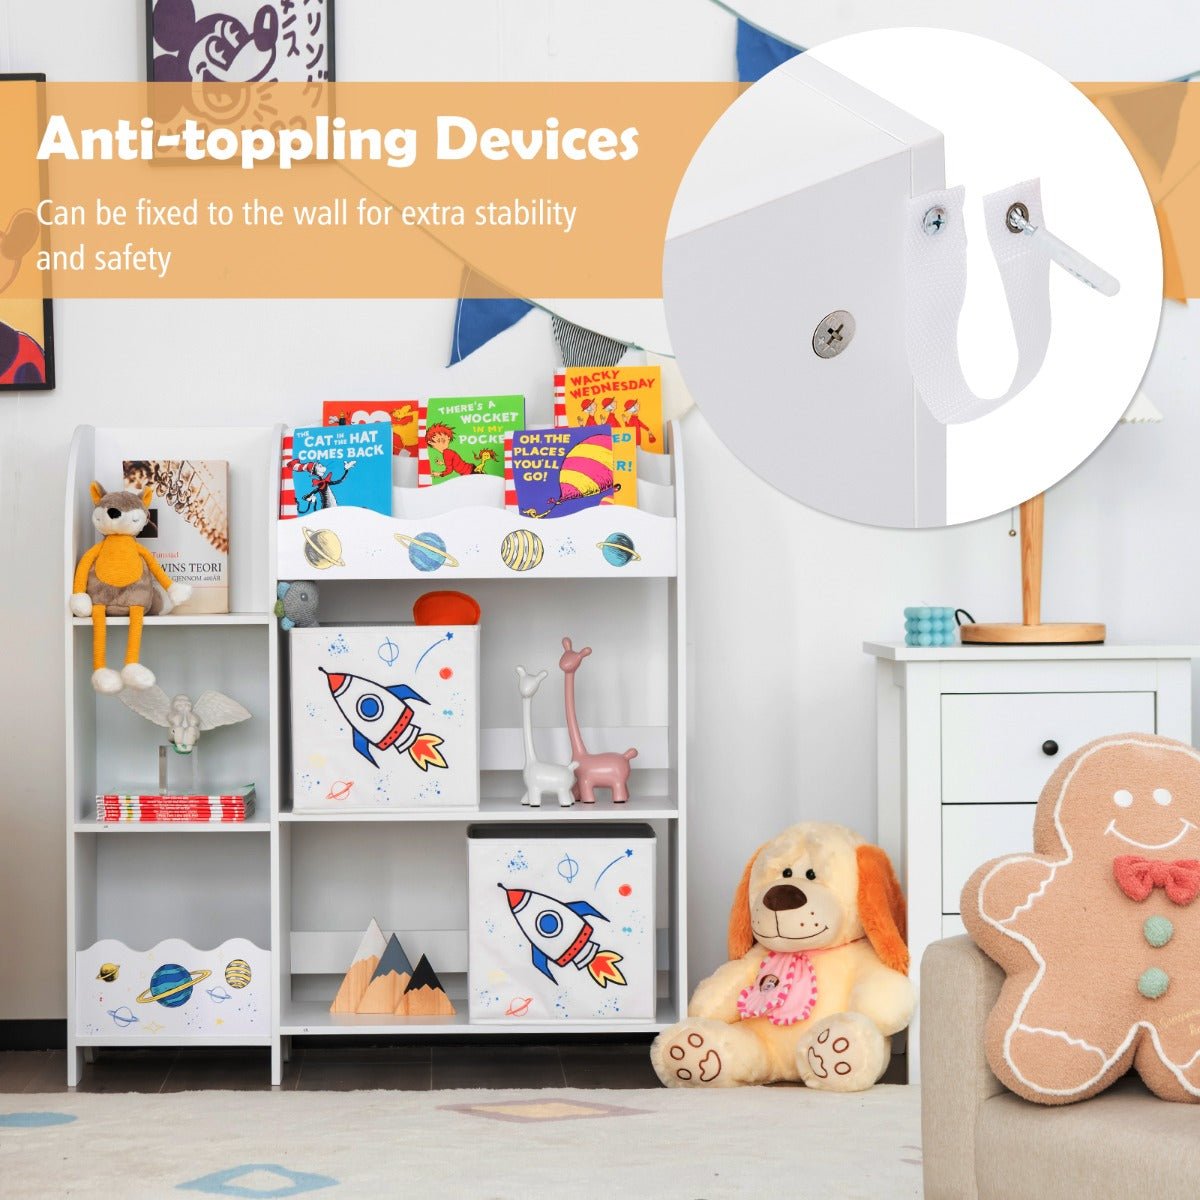 Child's Room Bookshelf Toy Storage with Display Shelf and Rack - Organized Play